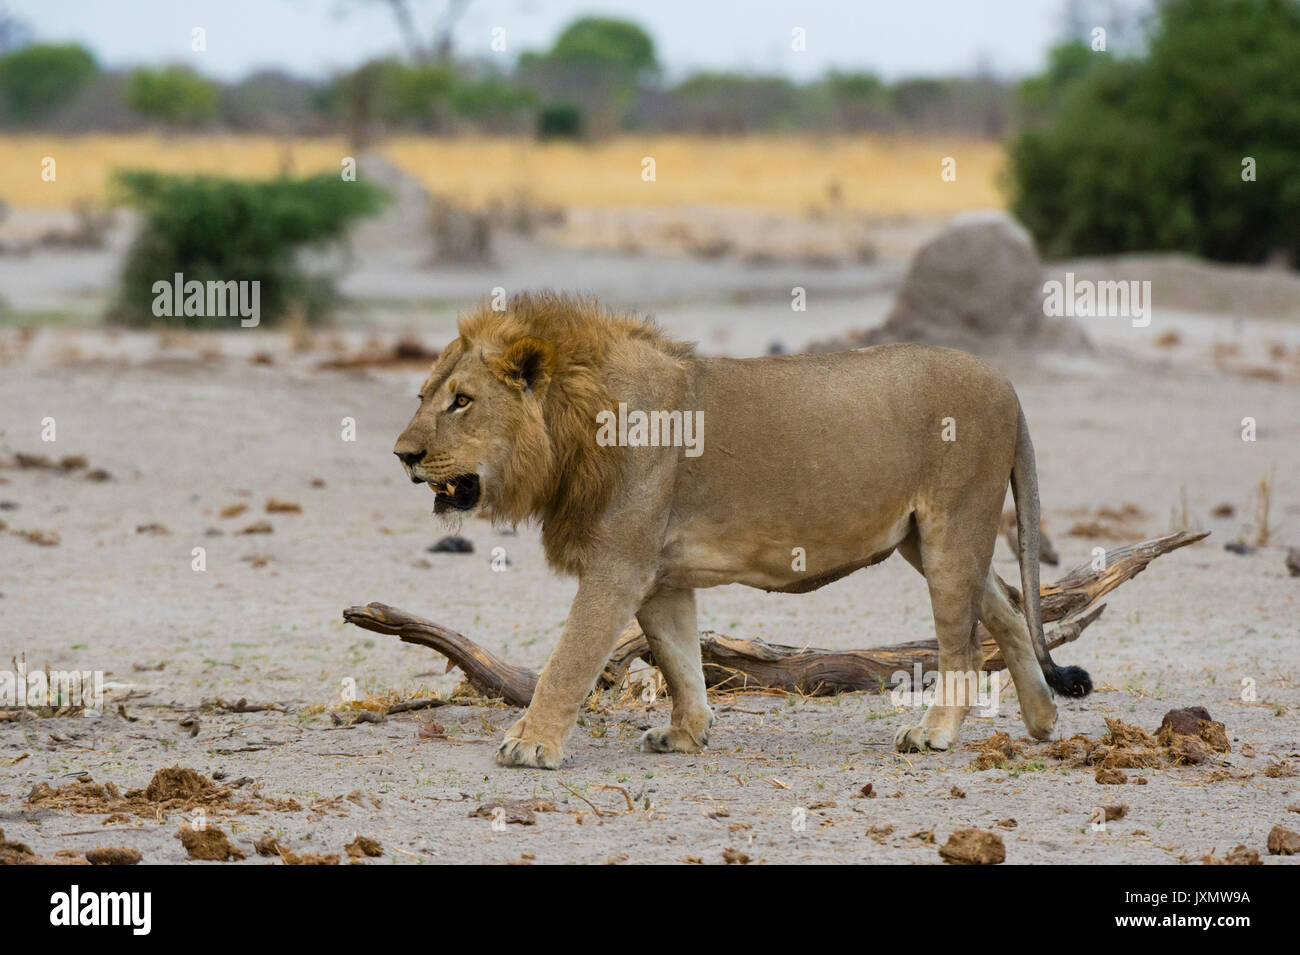 Male lion (Panthera leo), Savuti, Chobe National Park, Botswana, Africa Banque D'Images